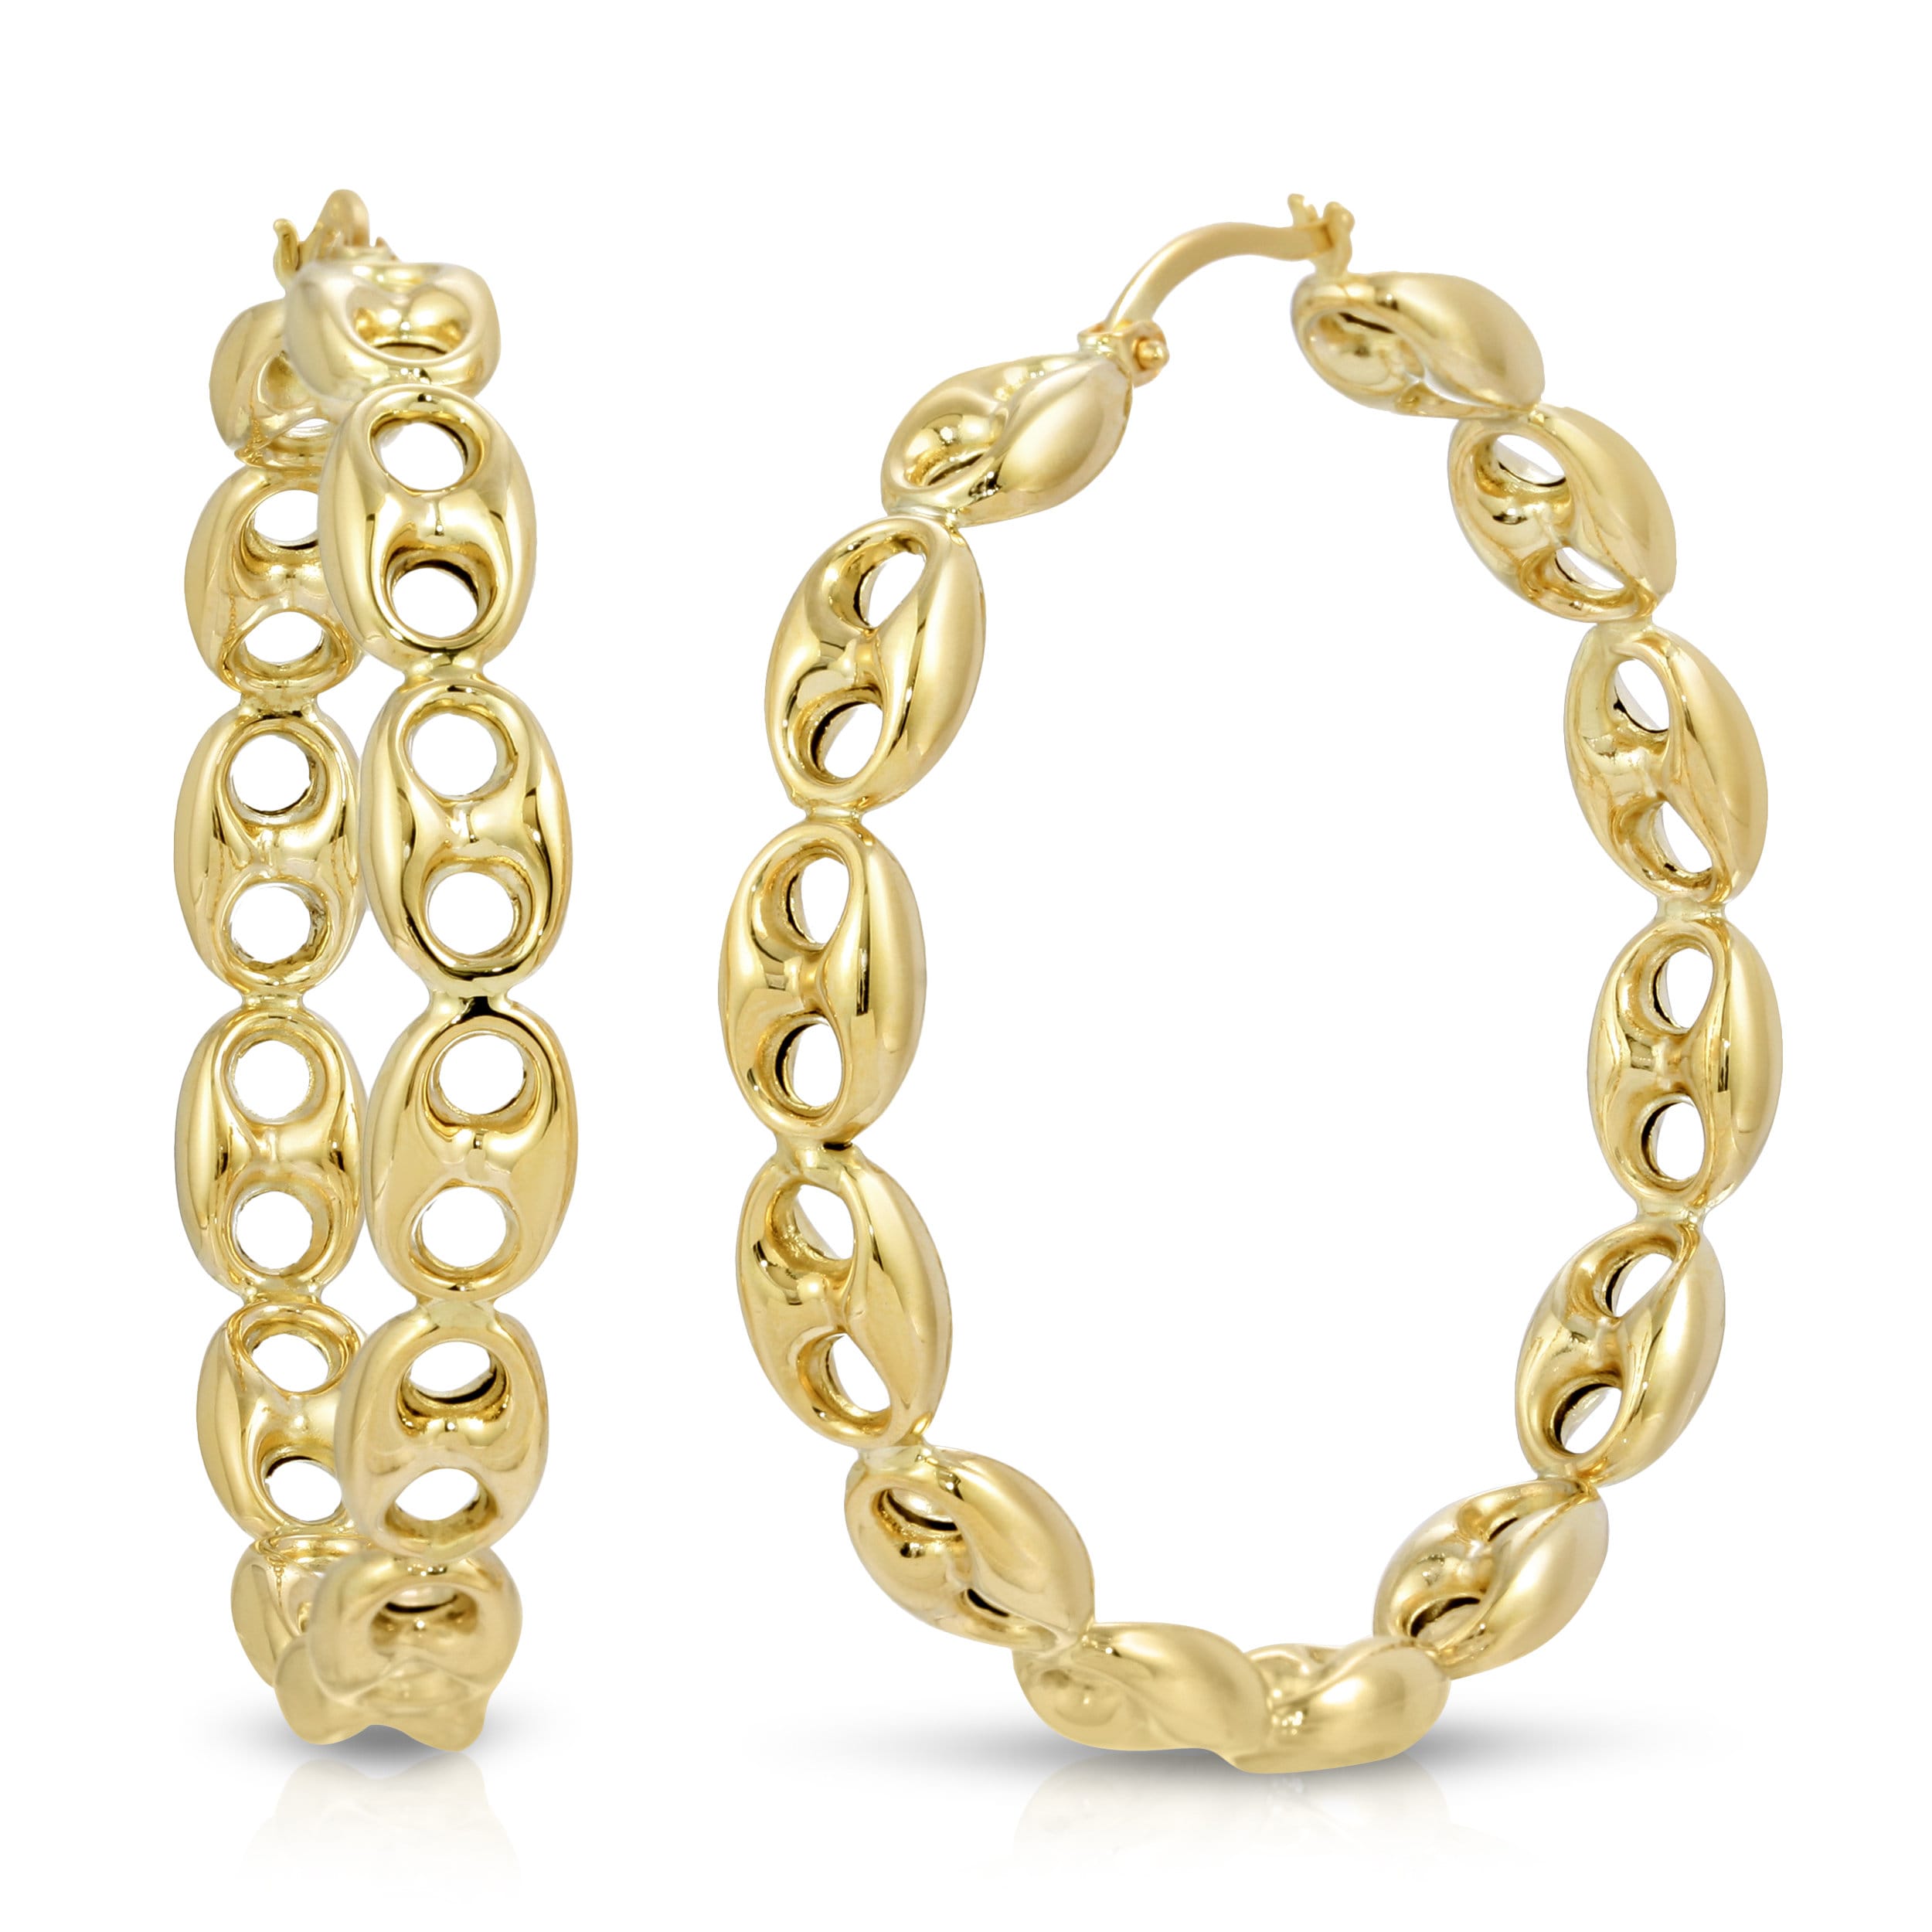 GUCCI' letter hoop earrings in gold-toned